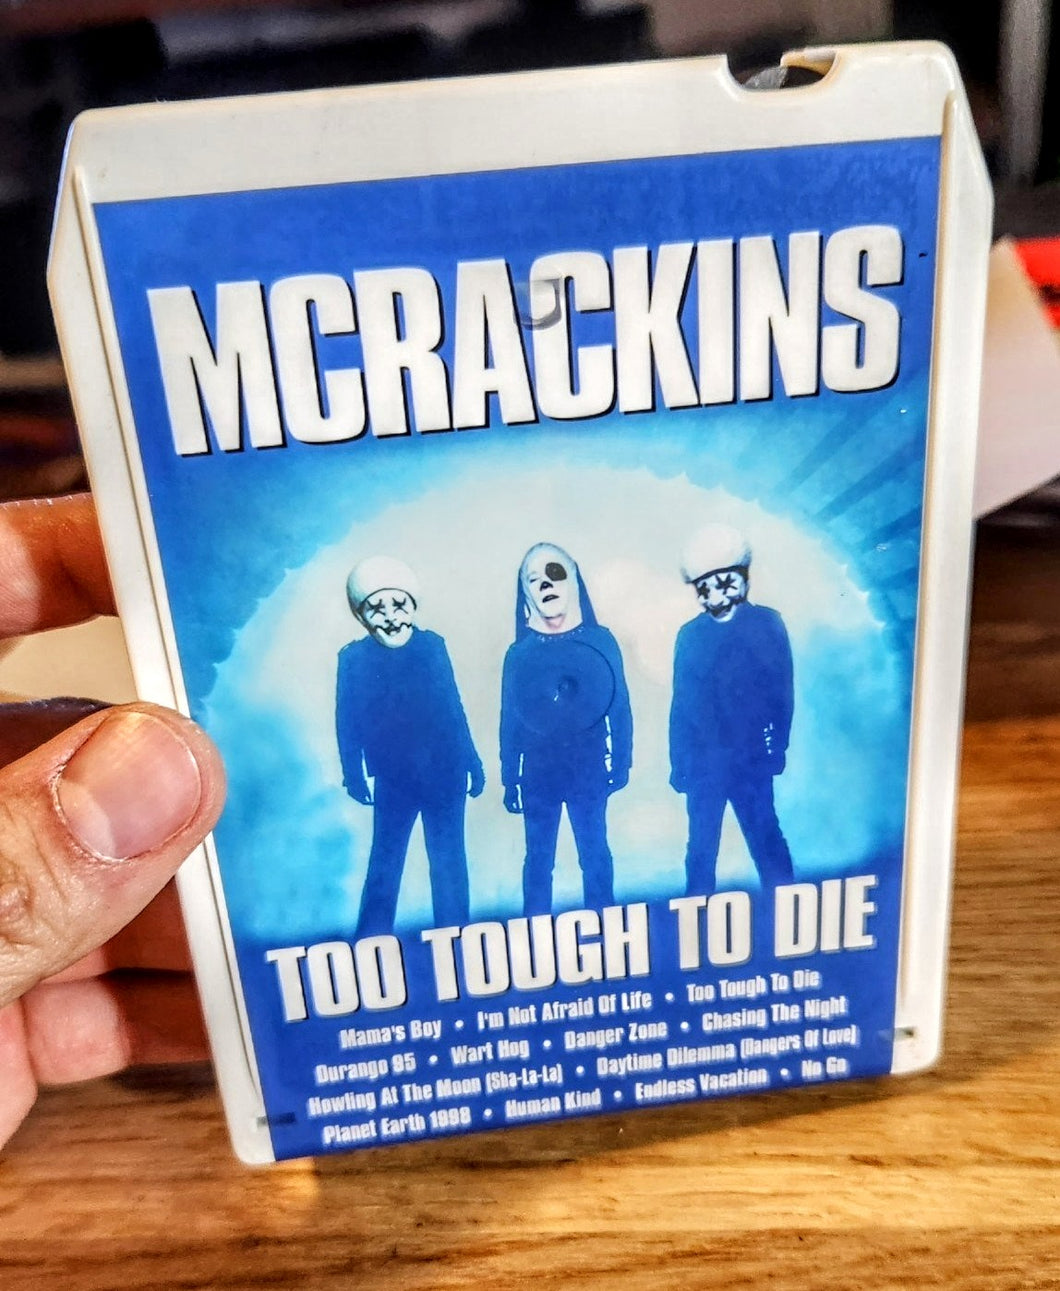 McRackins - Too tough to die (pre order)